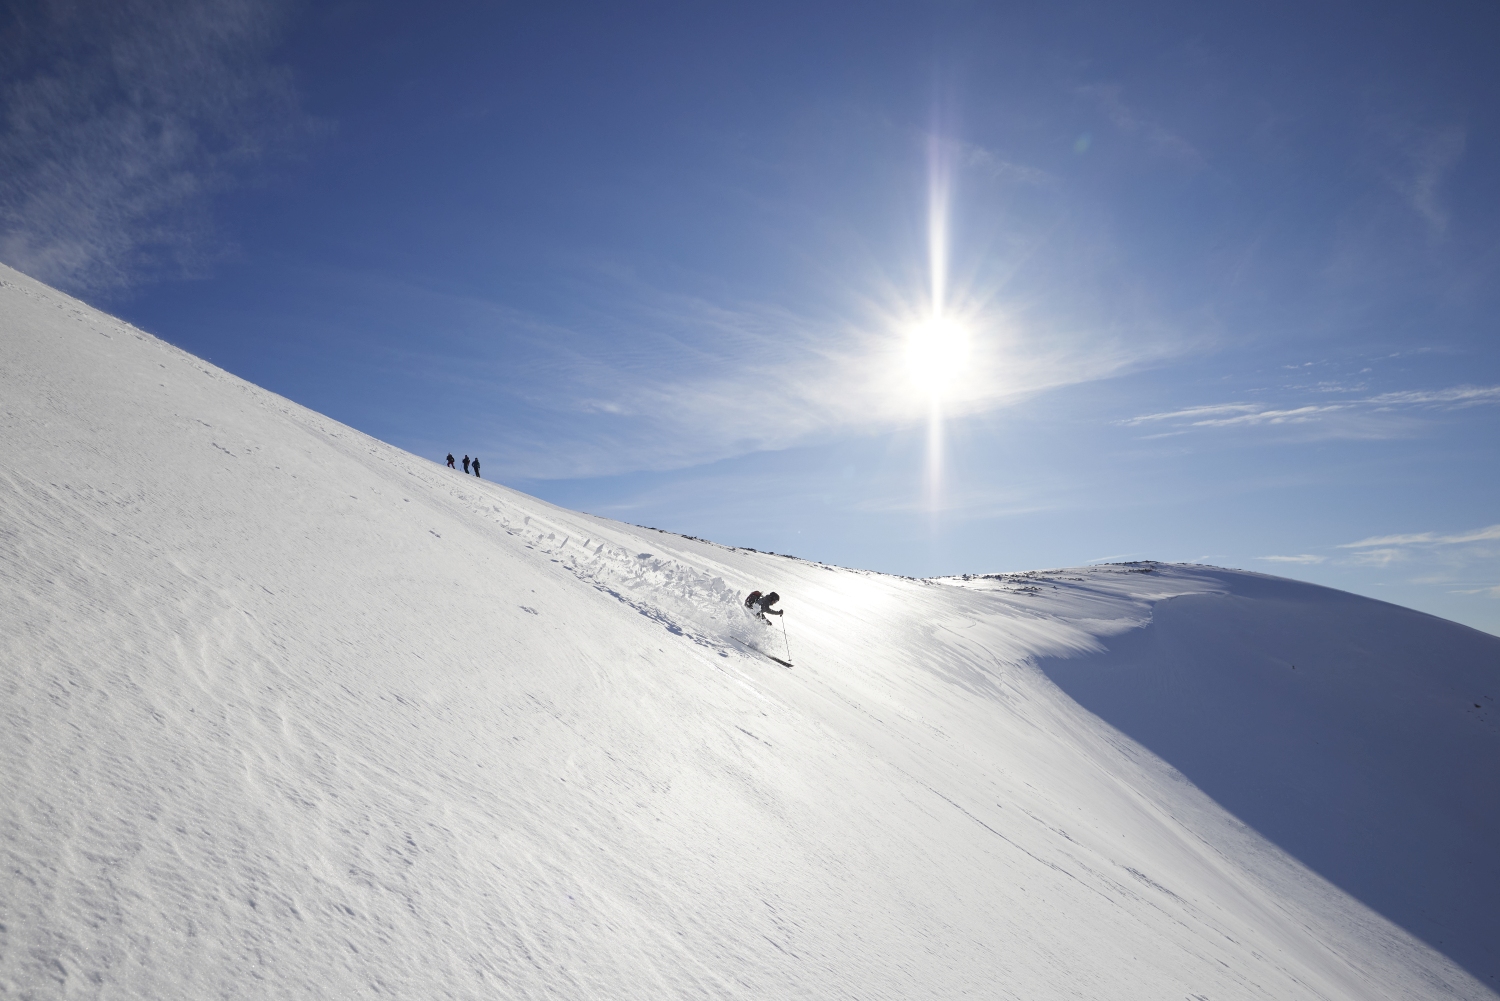 Skier creating snow dusting riding down fresh slope, Scotland